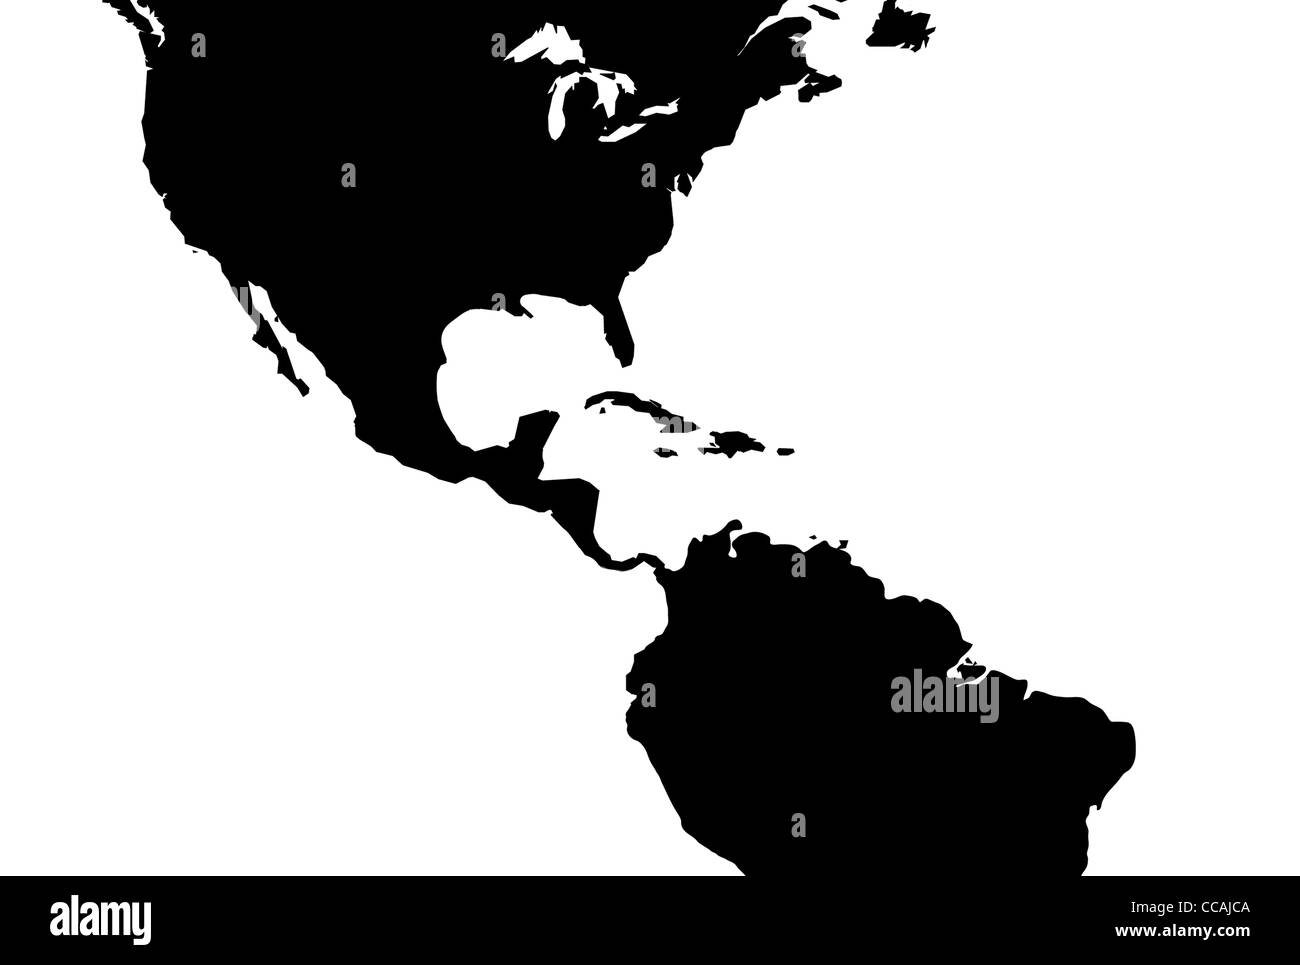 Caribbean central America map, illustration Stock Photo